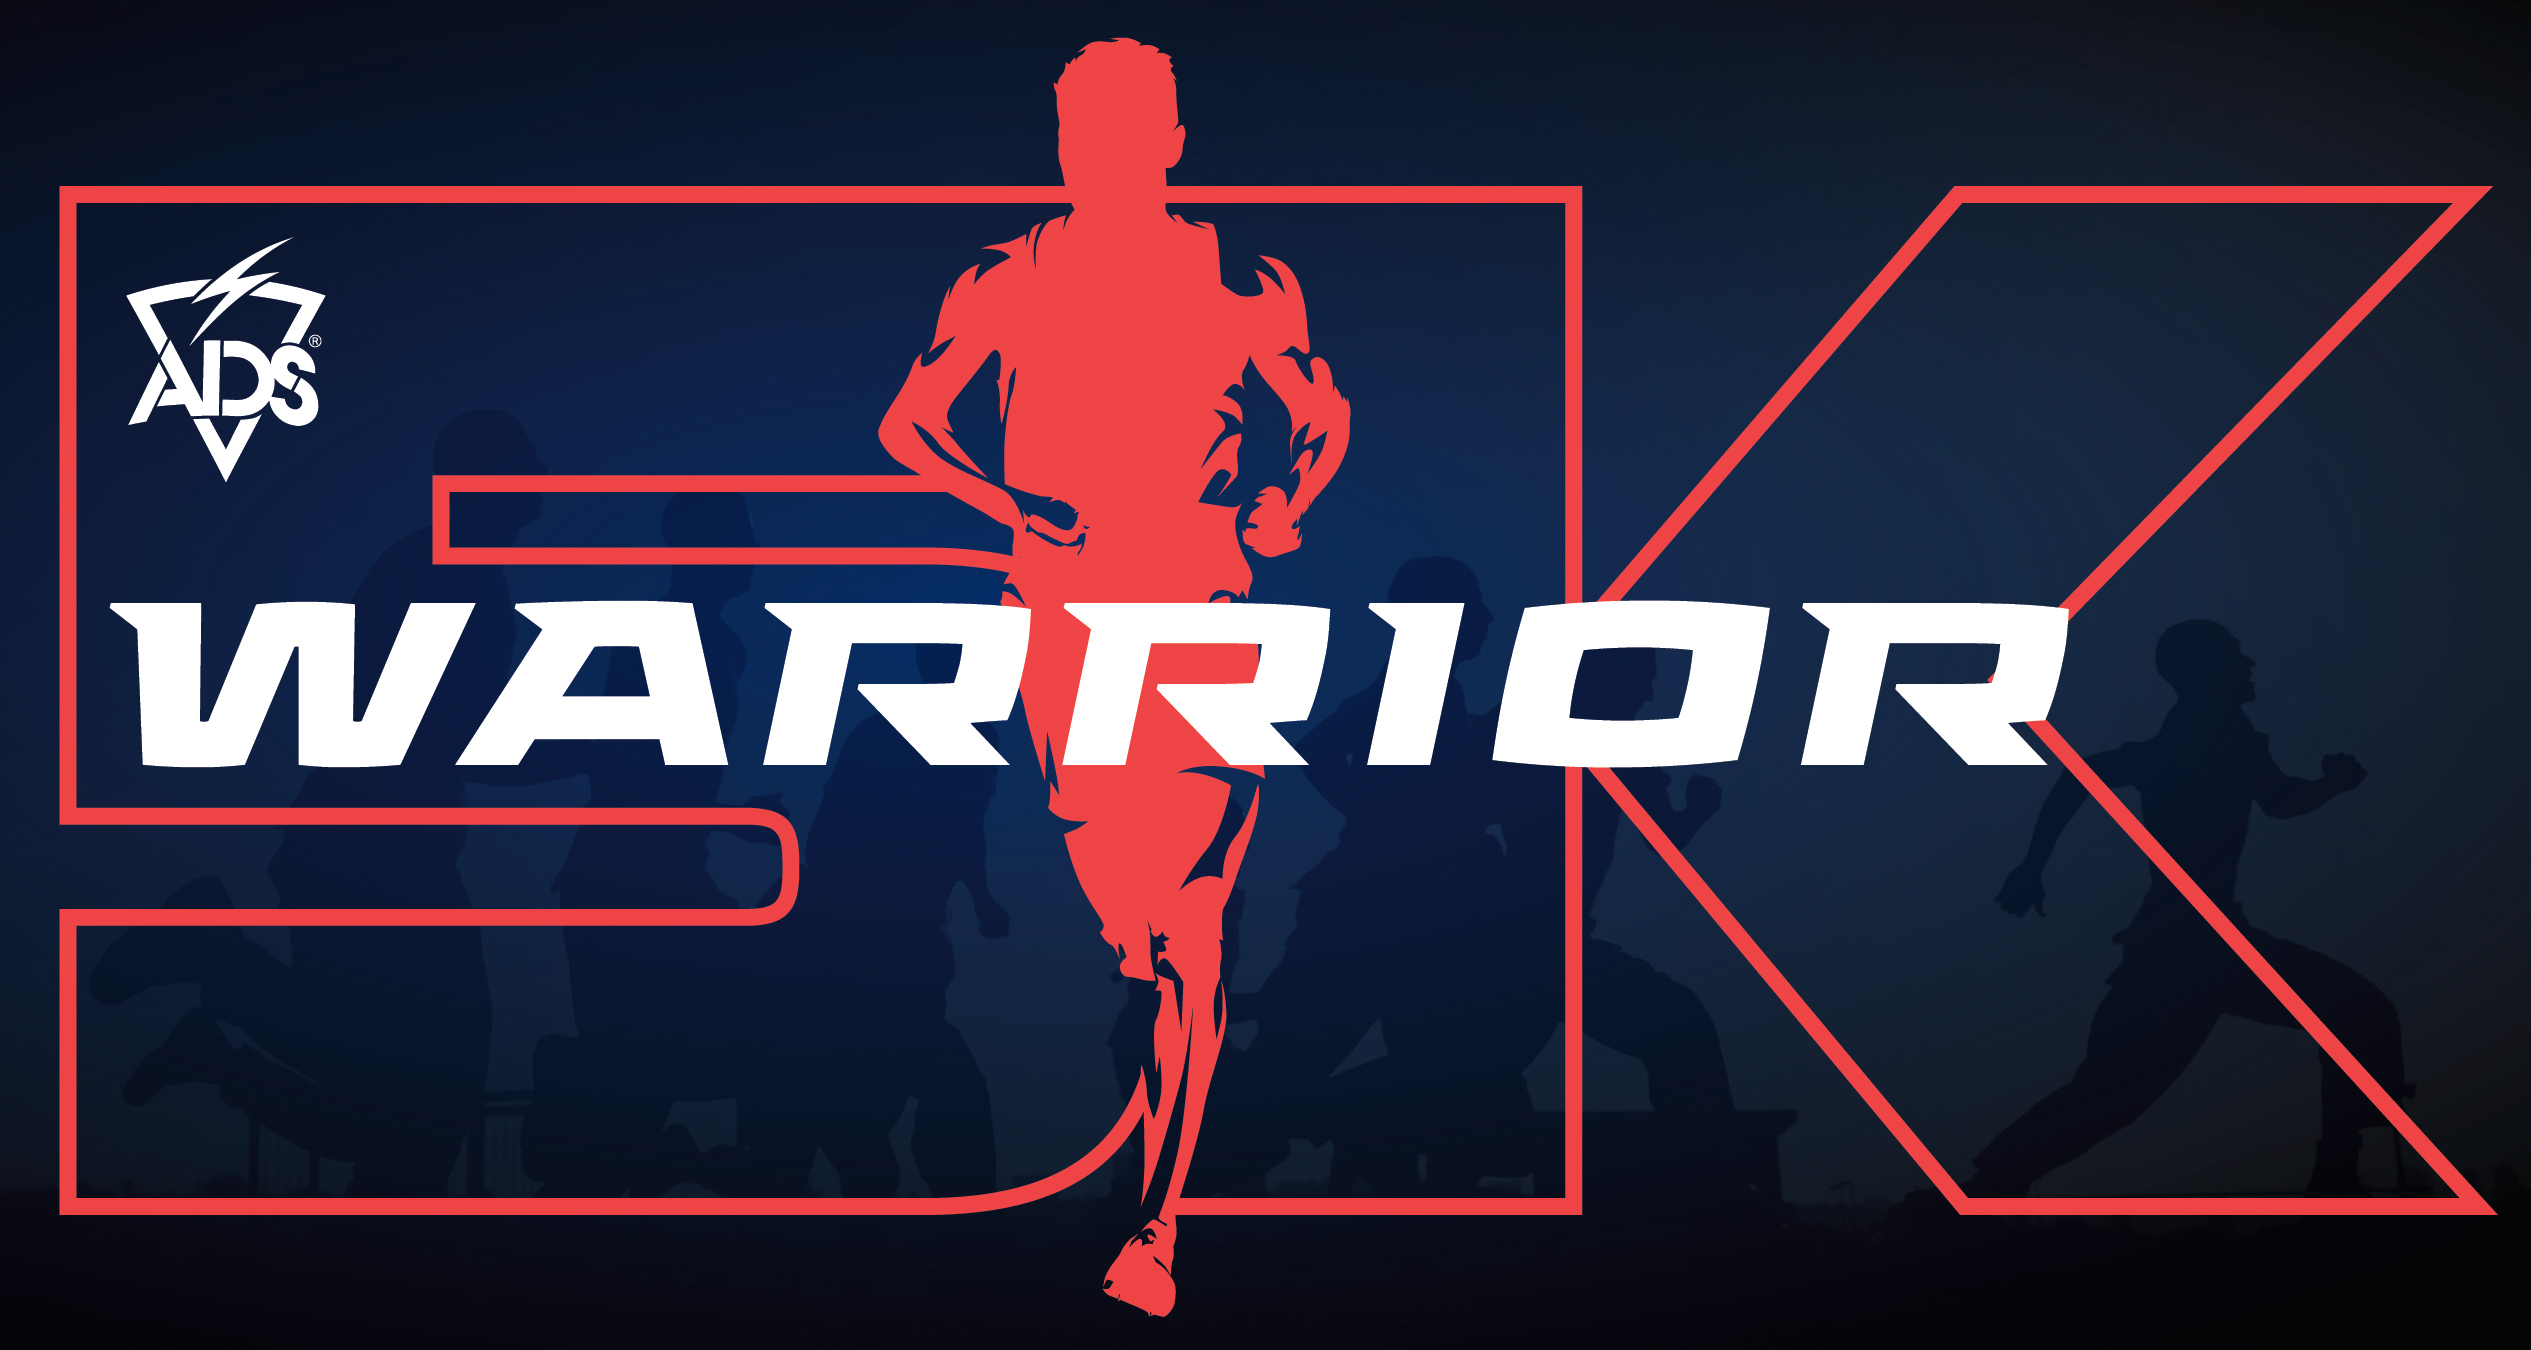 ADS Warrior East 5K logo on RaceRaves